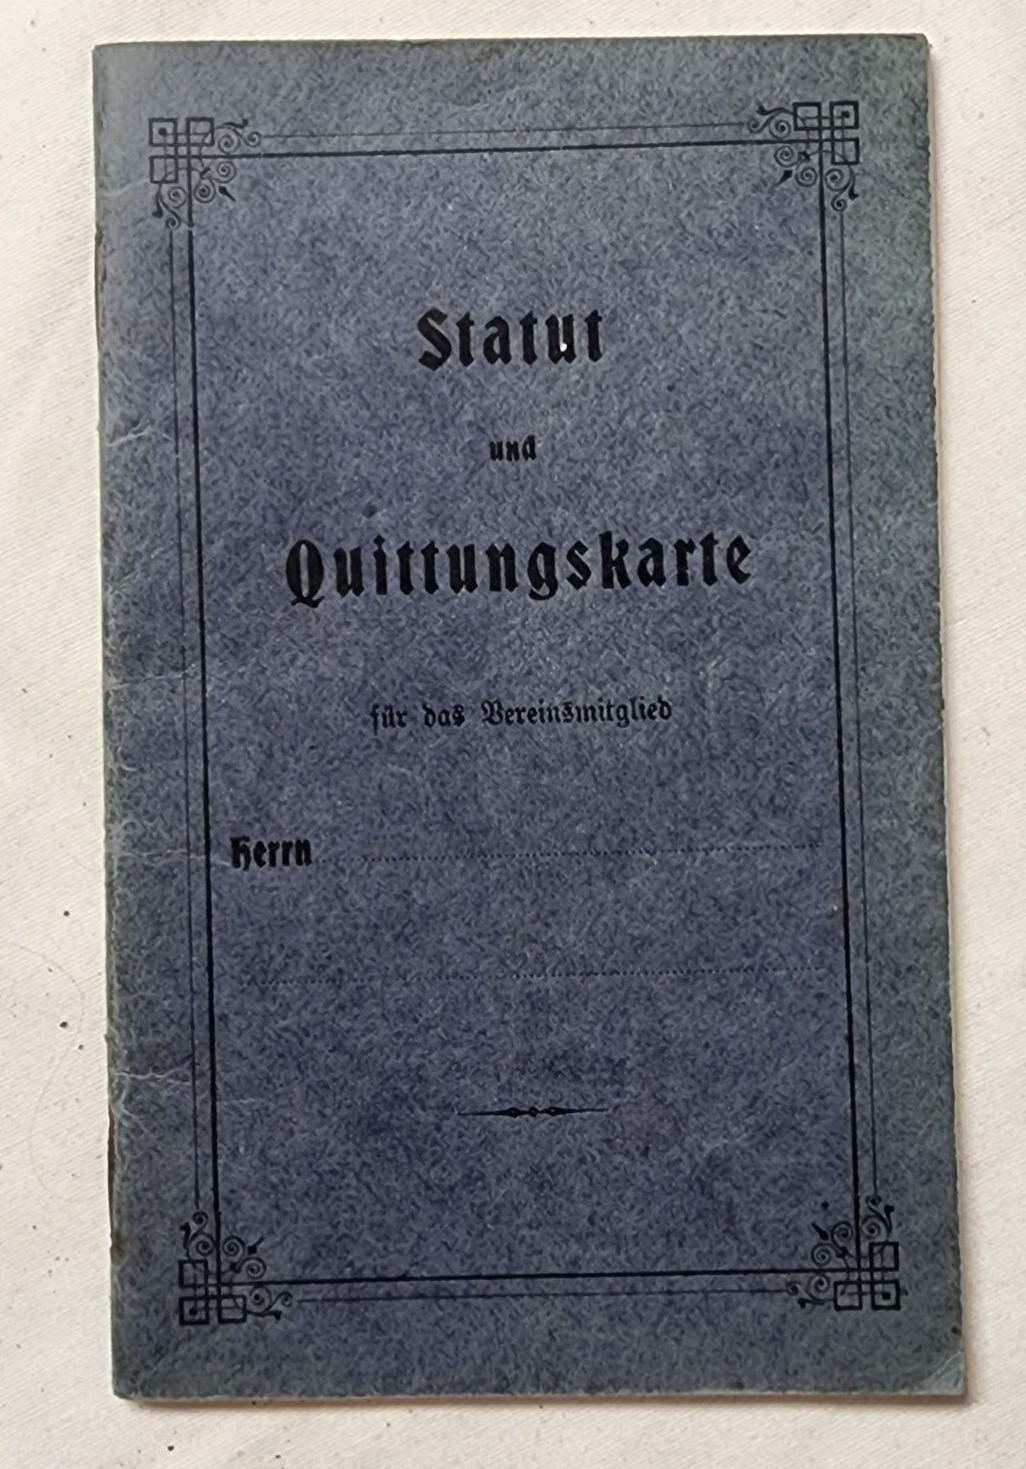 Pre WW2 WWII Germany Quittungsbuch forced labor work camp document receipt book